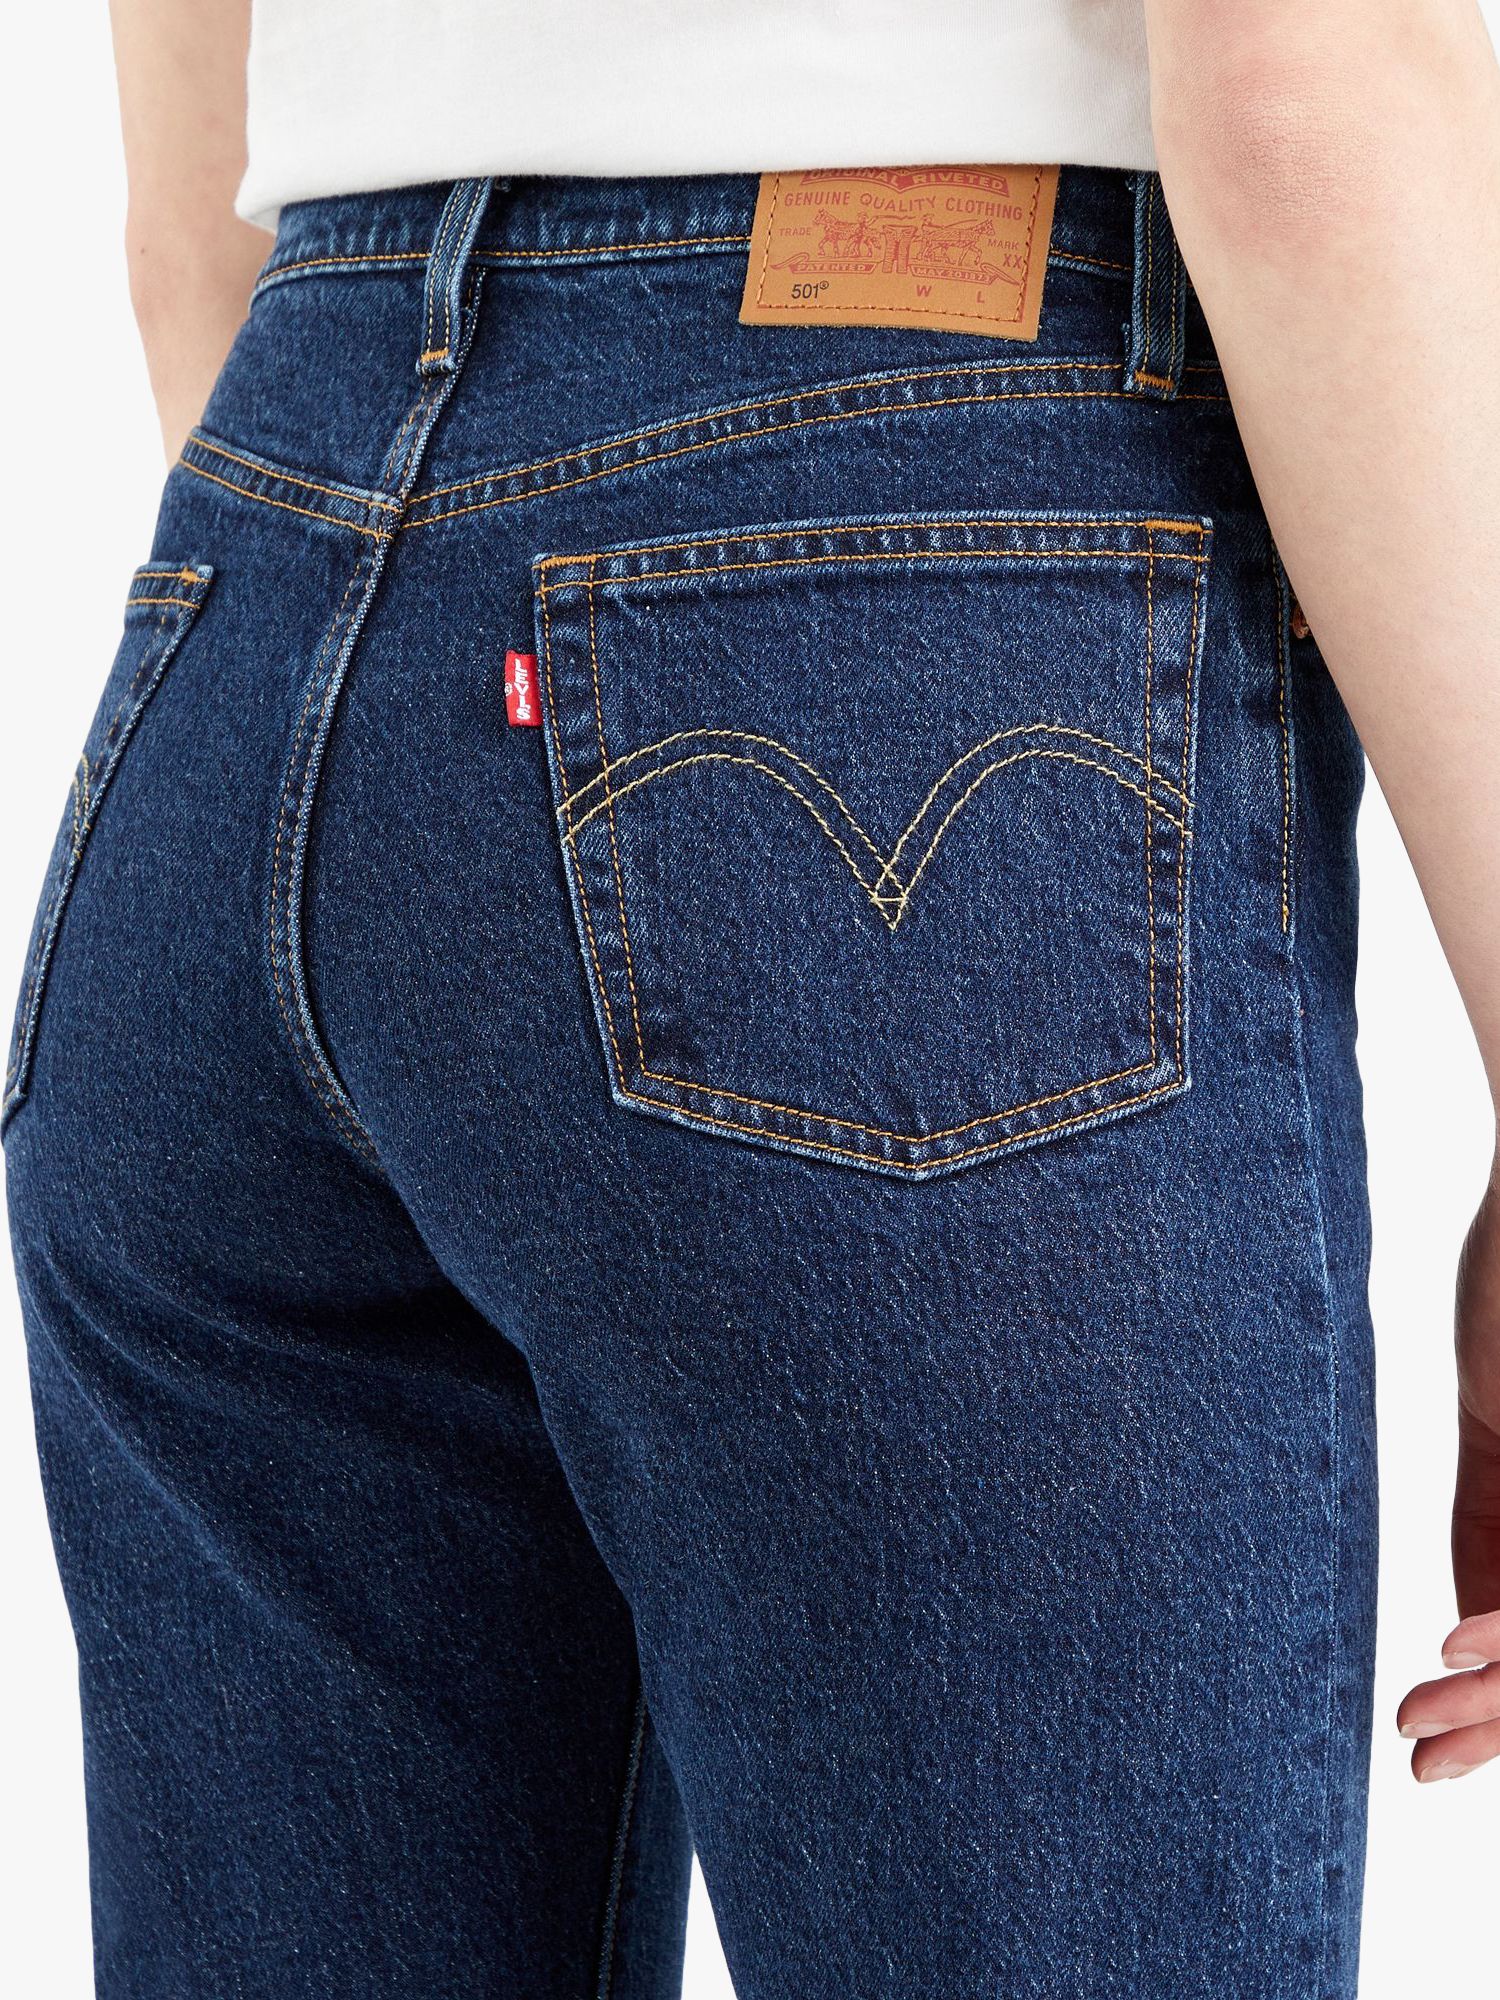 Levi's 501 Cropped Jeans, Salsa Stonewash at John Lewis & Partners